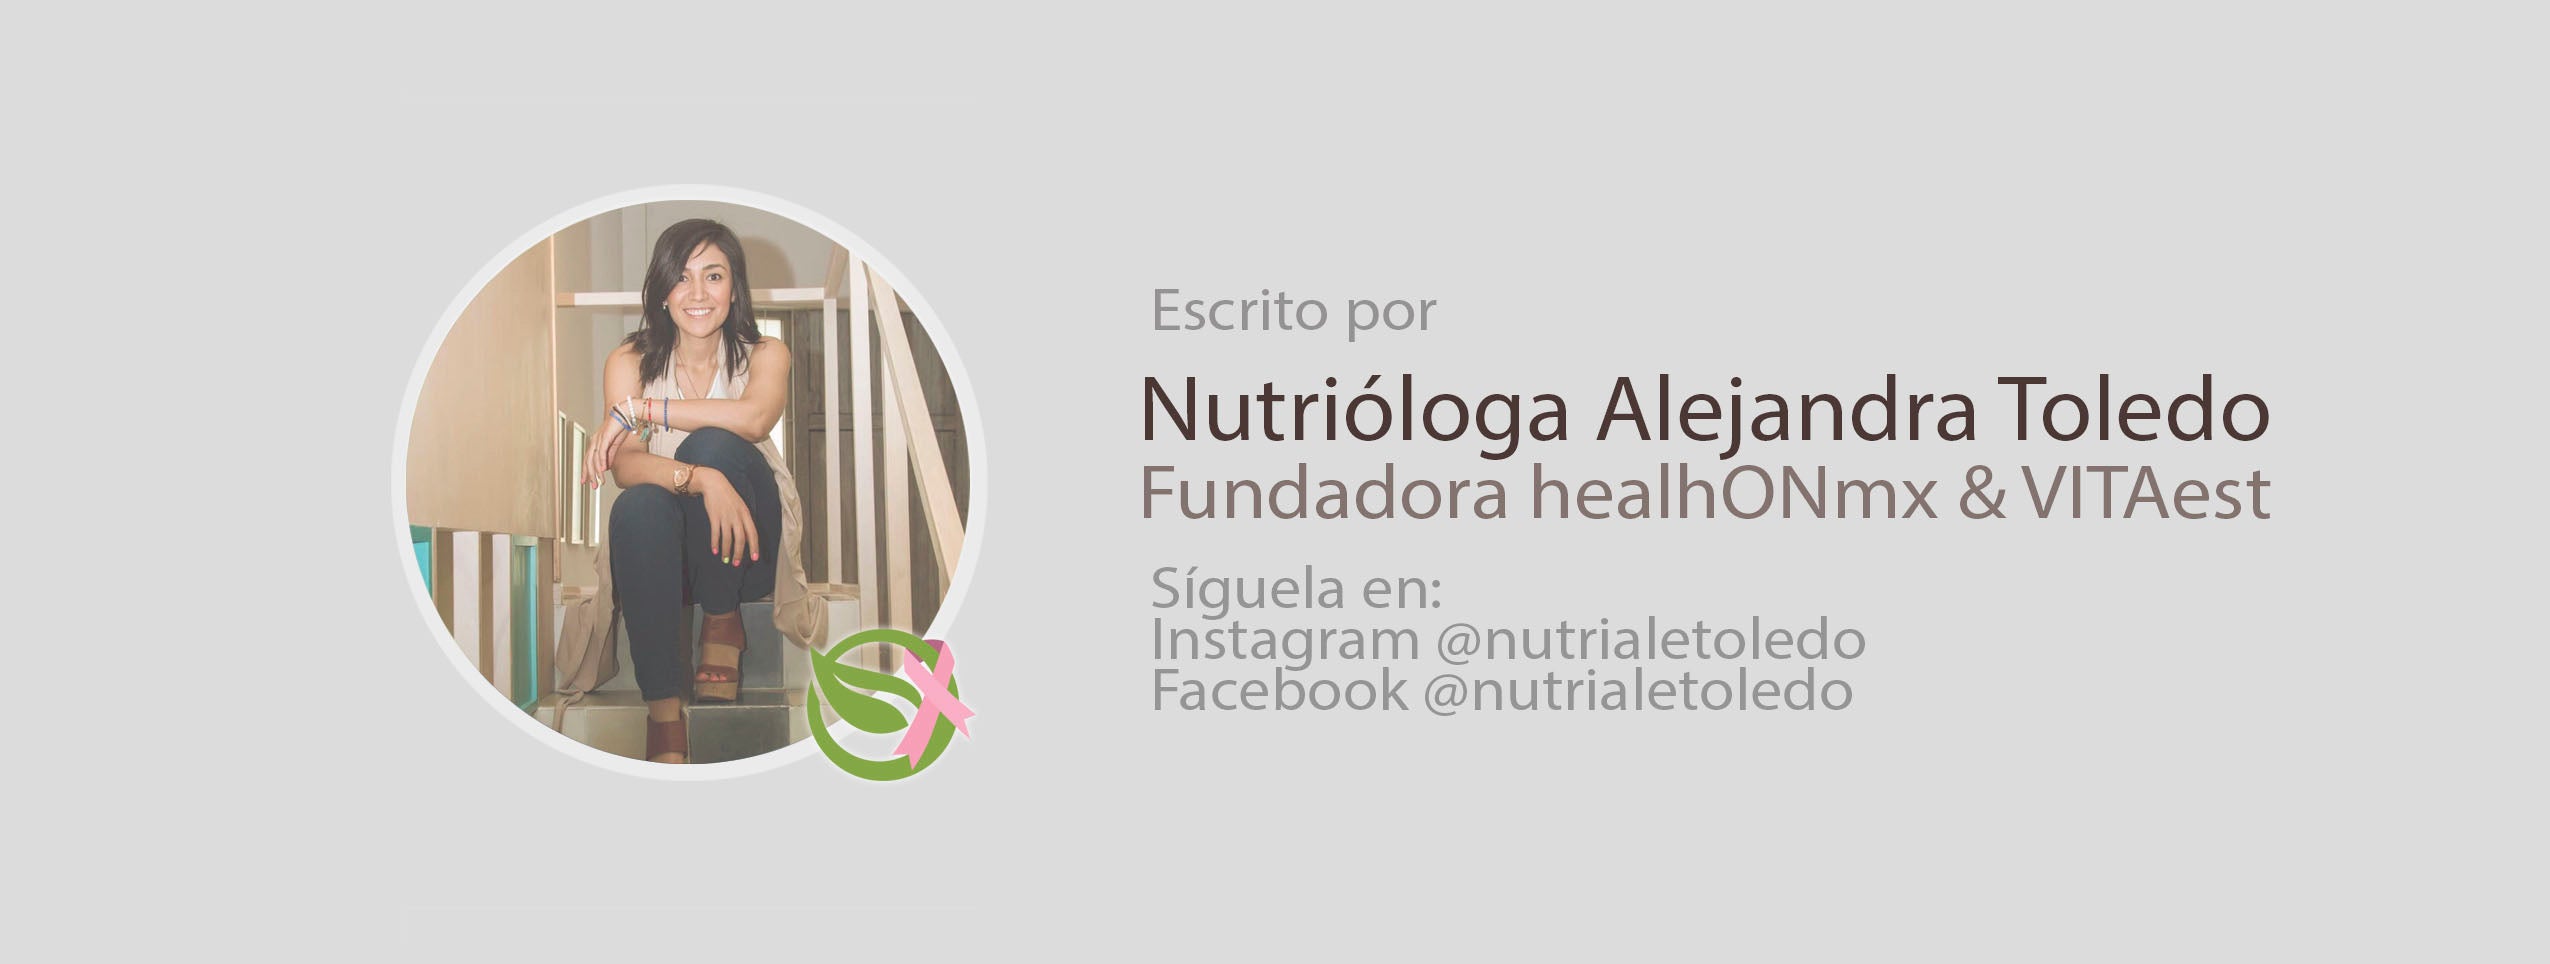 Nutrióloga Alejandra Toledo 